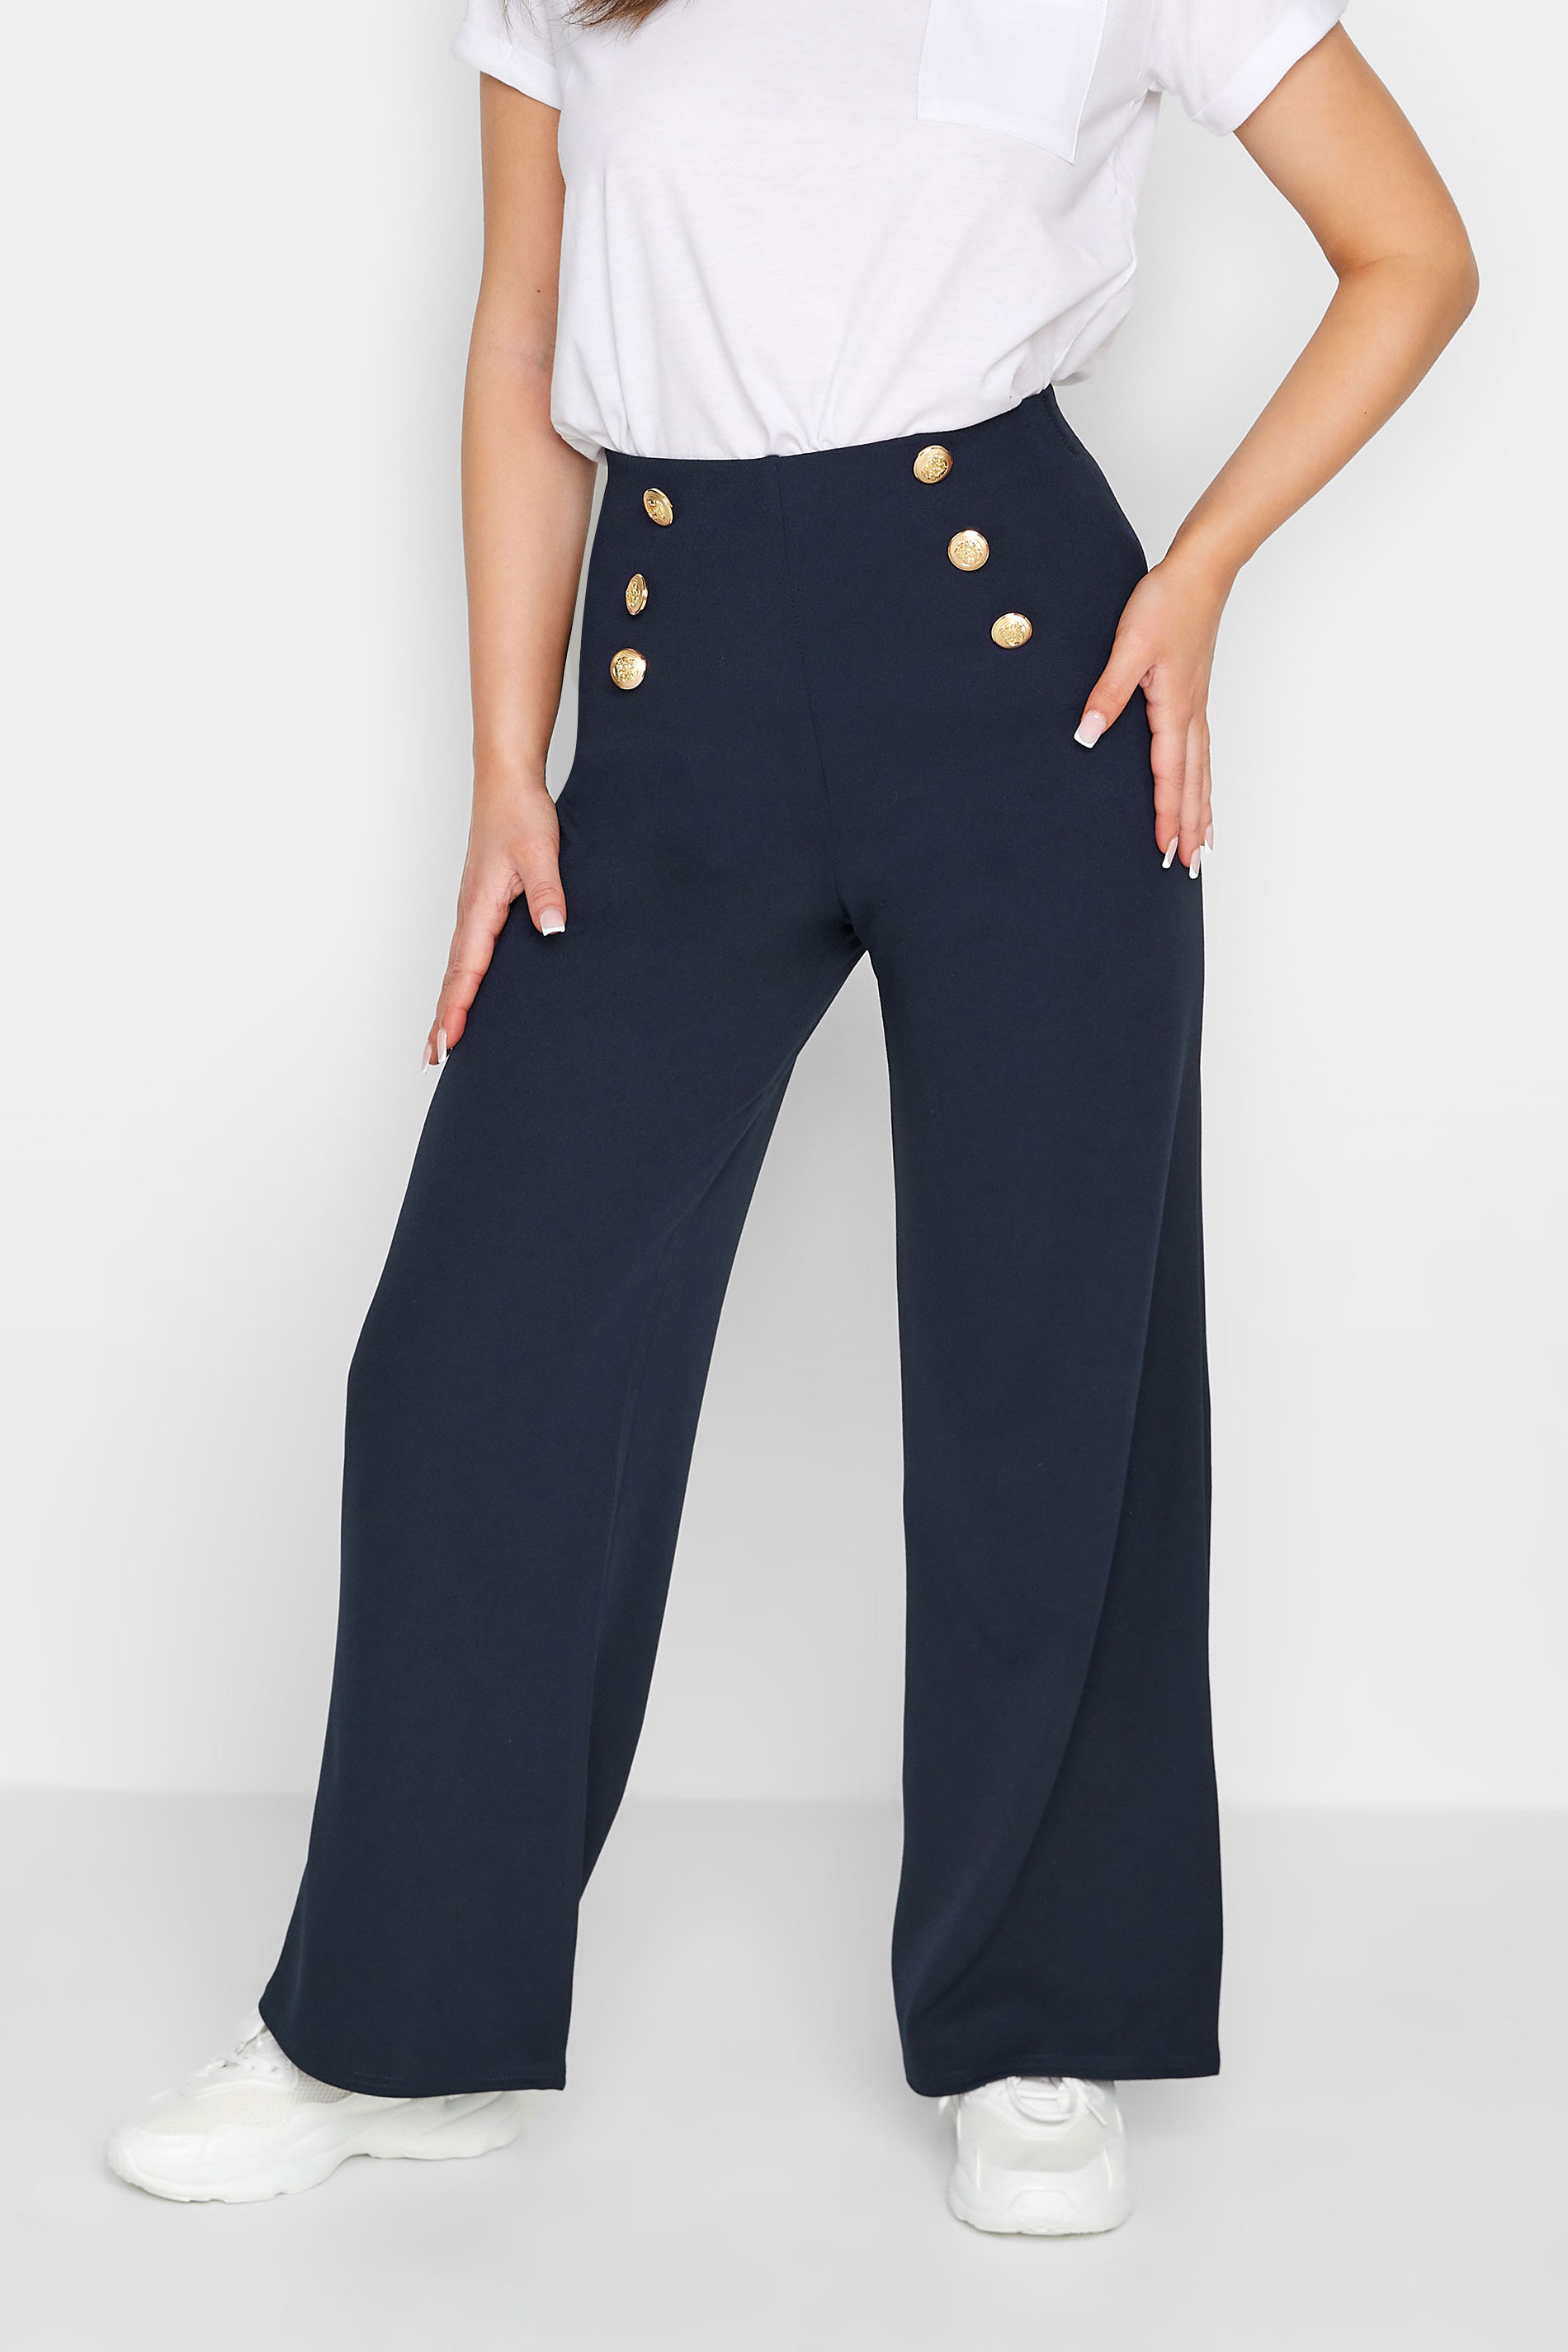 PixieGirl Navy Blue Button Front Wide Leg Trousers | PixieGirl 1